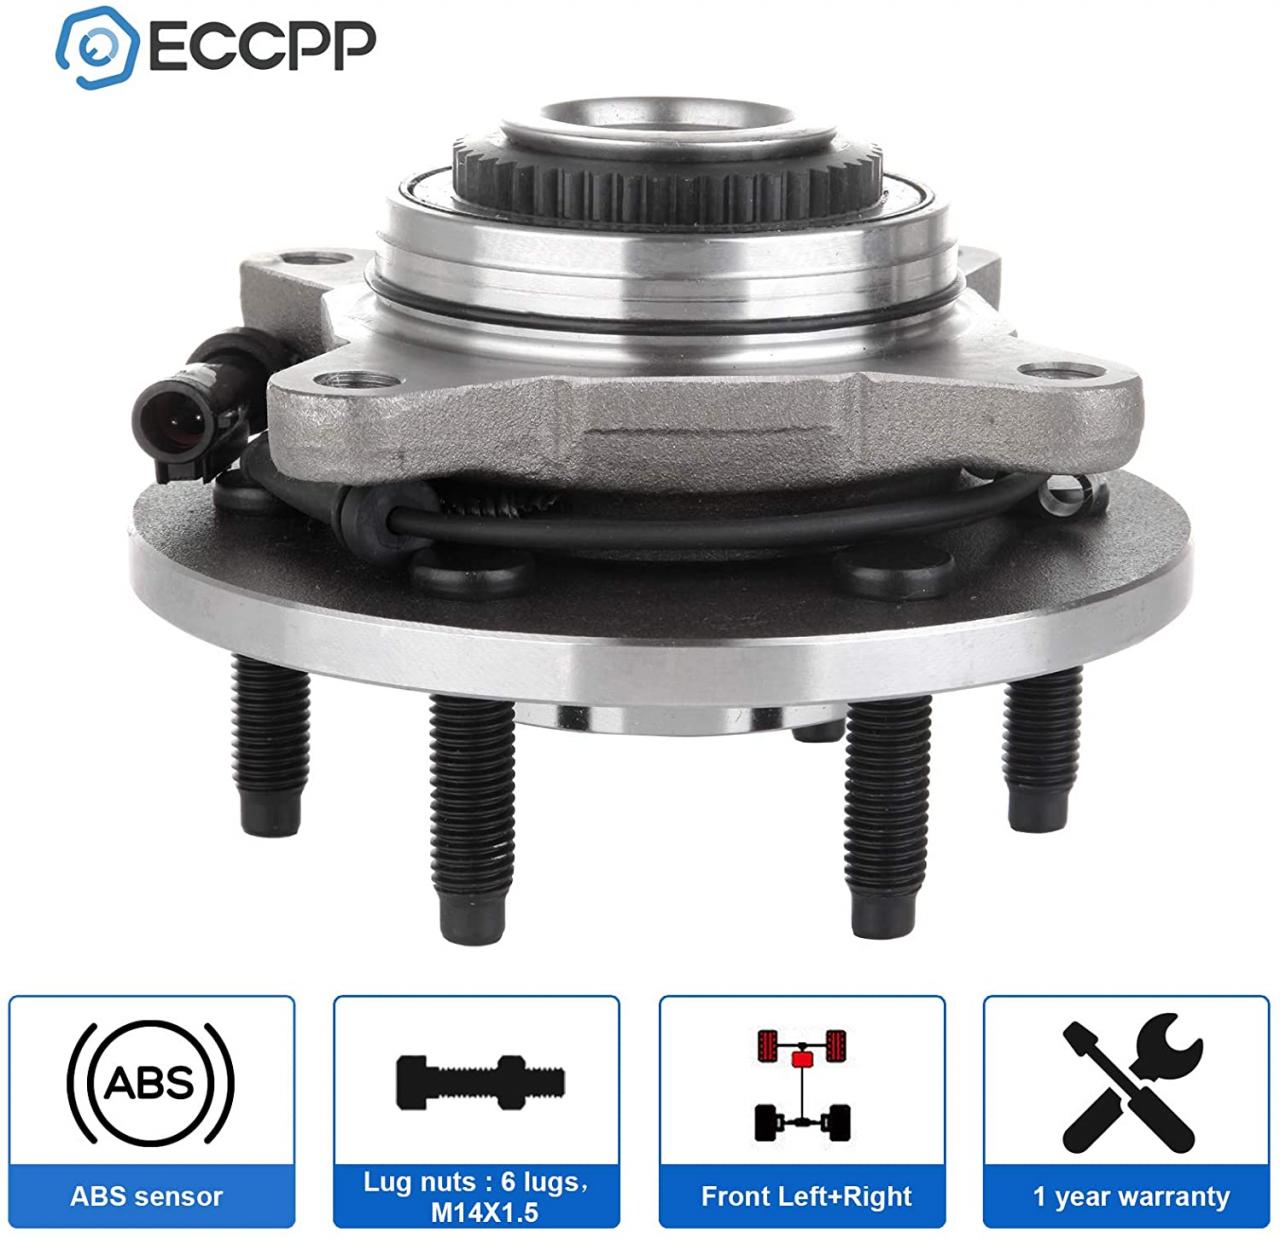 Buy ECCPP Wheel Hub Bearing Assembly New Premium Bearing and Hub Assembly  Front 6 Lugs W/ABS 515046 Online in Hong Kong. B074TCQSR9